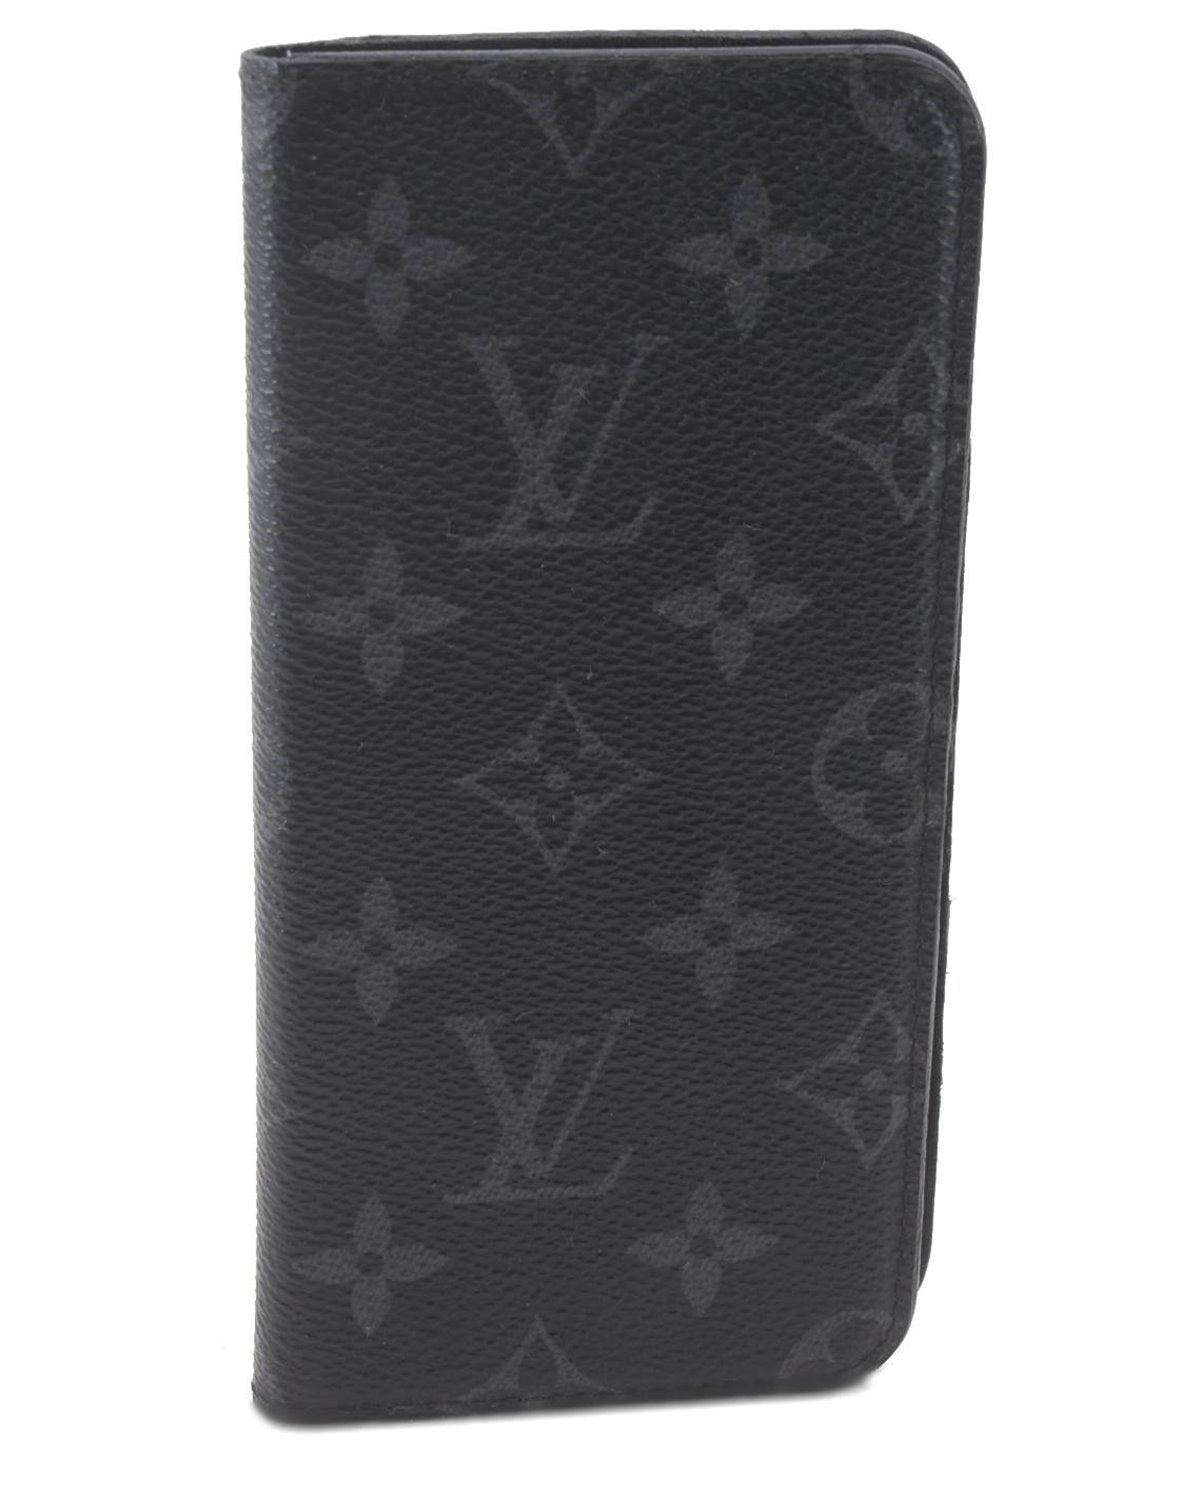 Authentic Louis Vuitton Monogram Eclipse Folio iPhone 7+ Case M62641 LV 0361D